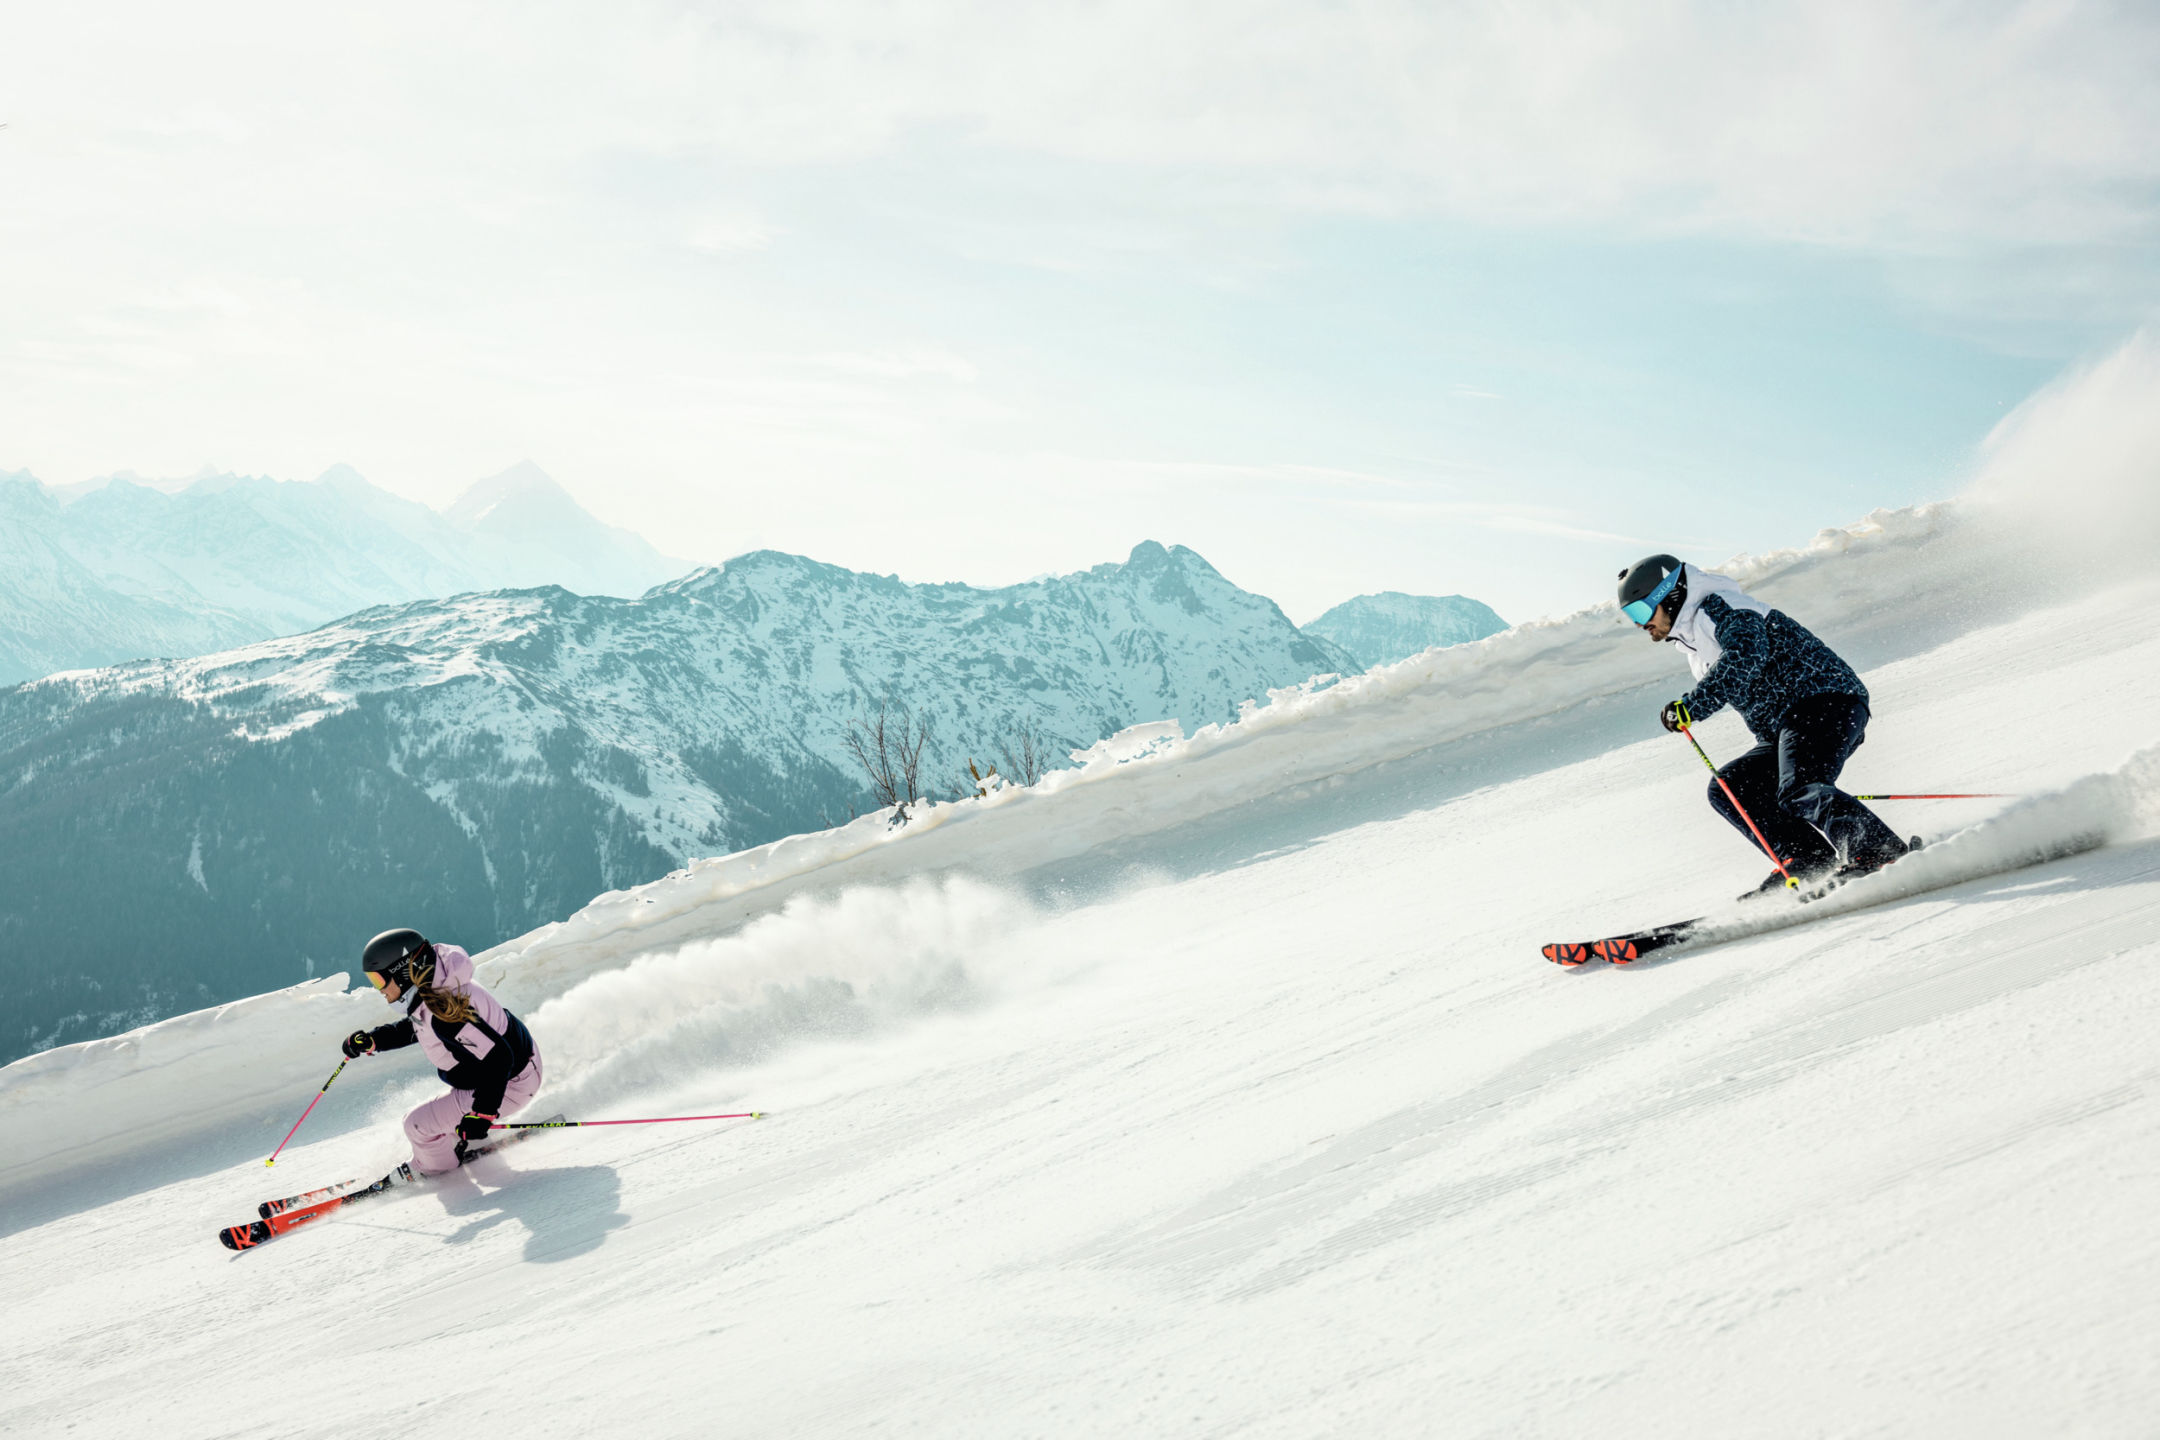 Mélanie and Loïc Meillard ski on the slopes of Thyon.